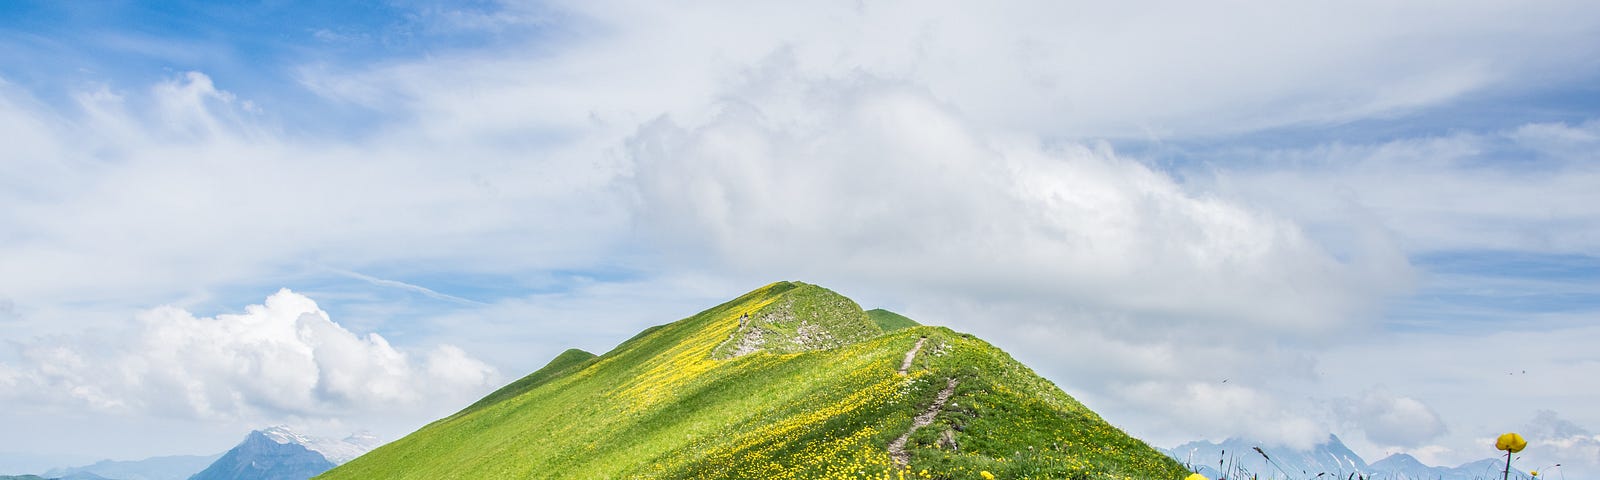 The gentle crest of a meadowed Alpine hillside